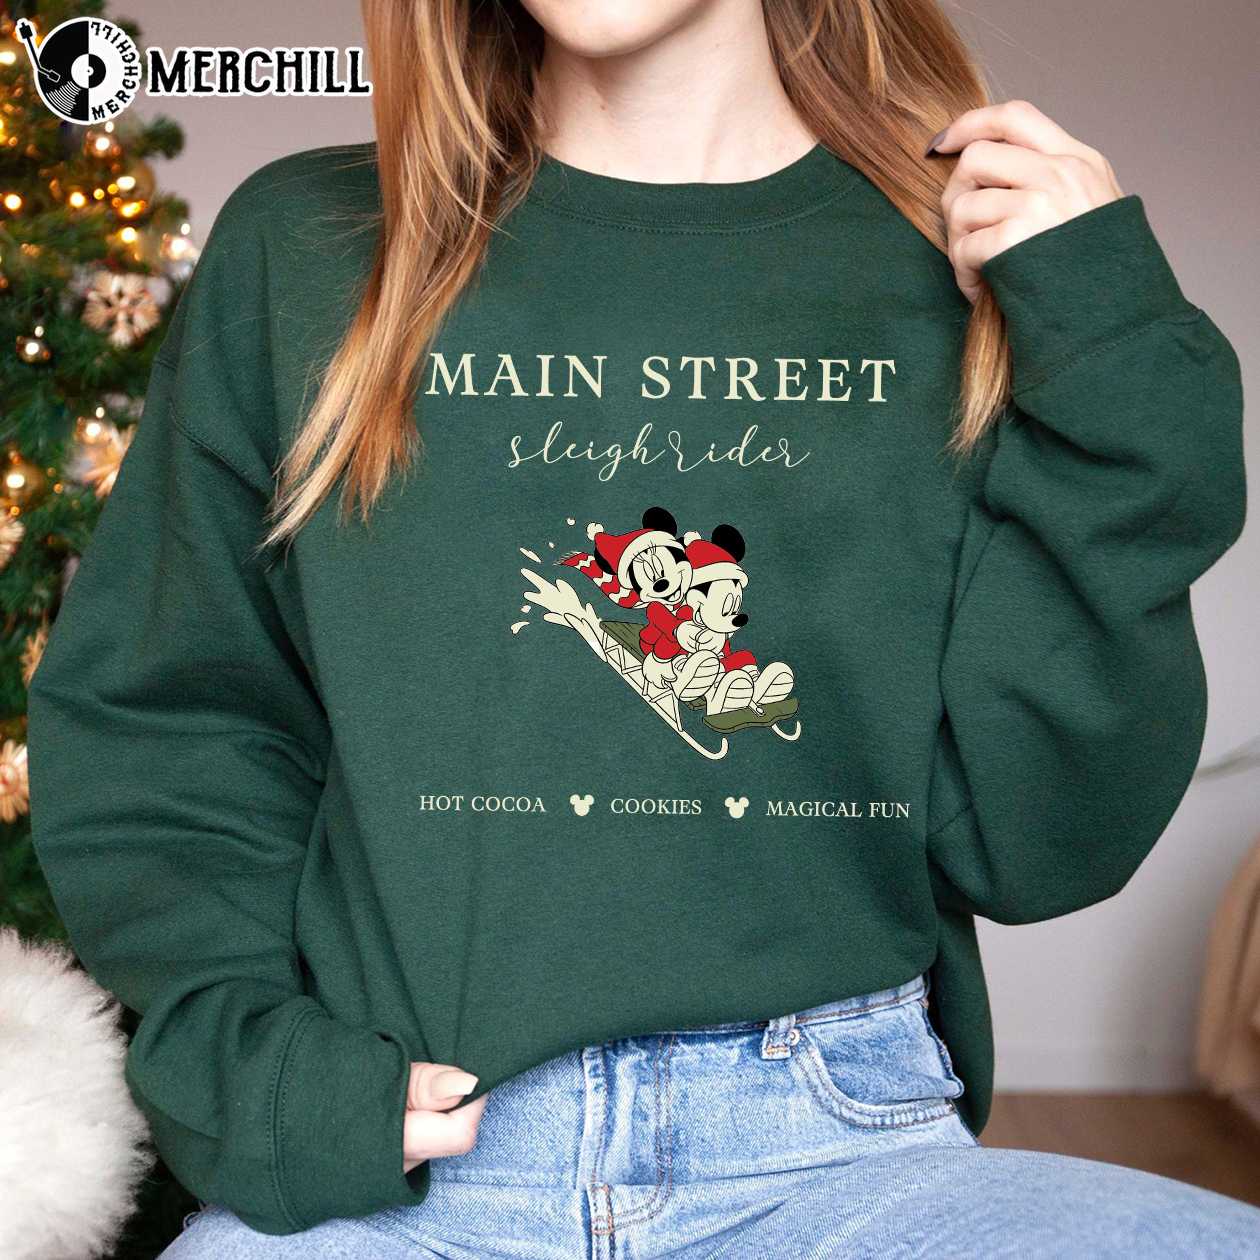 https://images.merchill.com/wp-content/uploads/2022/11/Disneyland-Main-Street-Christmas-Sweatshirt-Couples-Christmas-Shirts-Christmas-Ideas-for-Couples.jpg